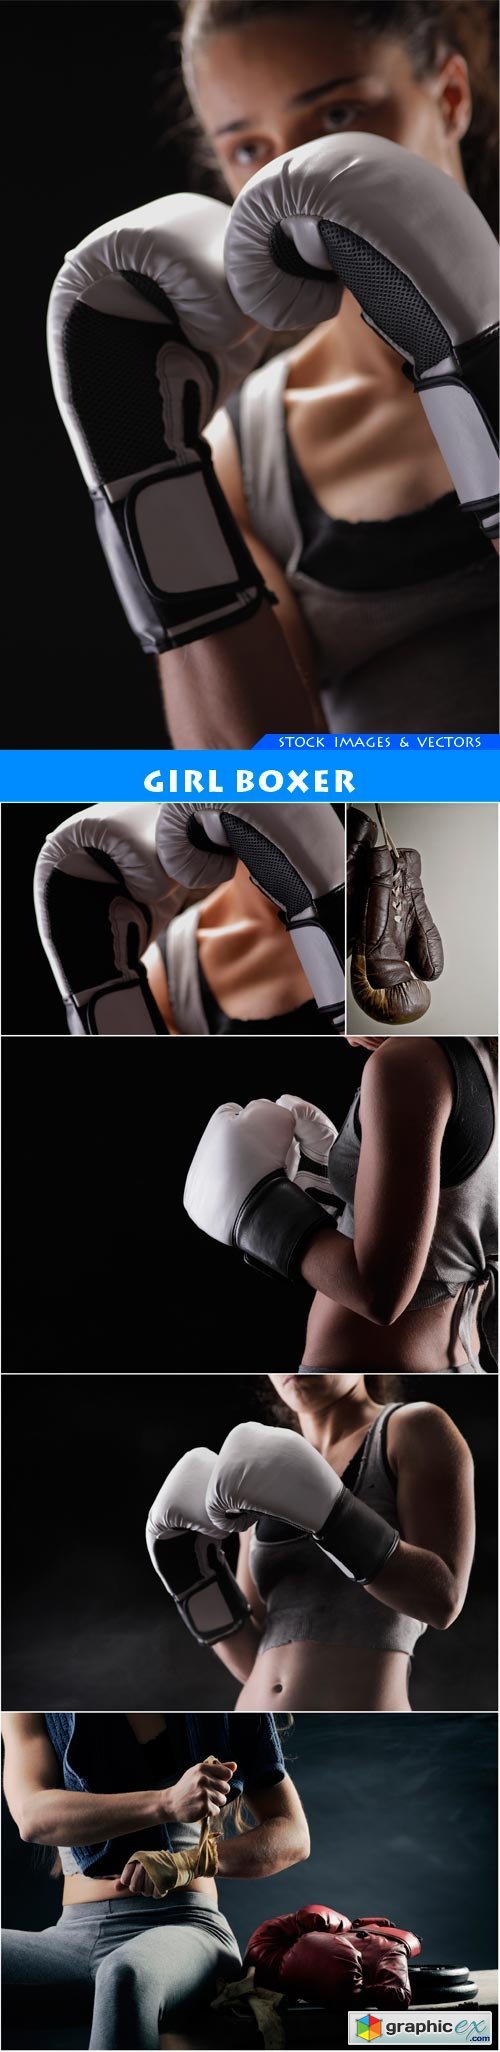 Girl boxer 5X JPEG